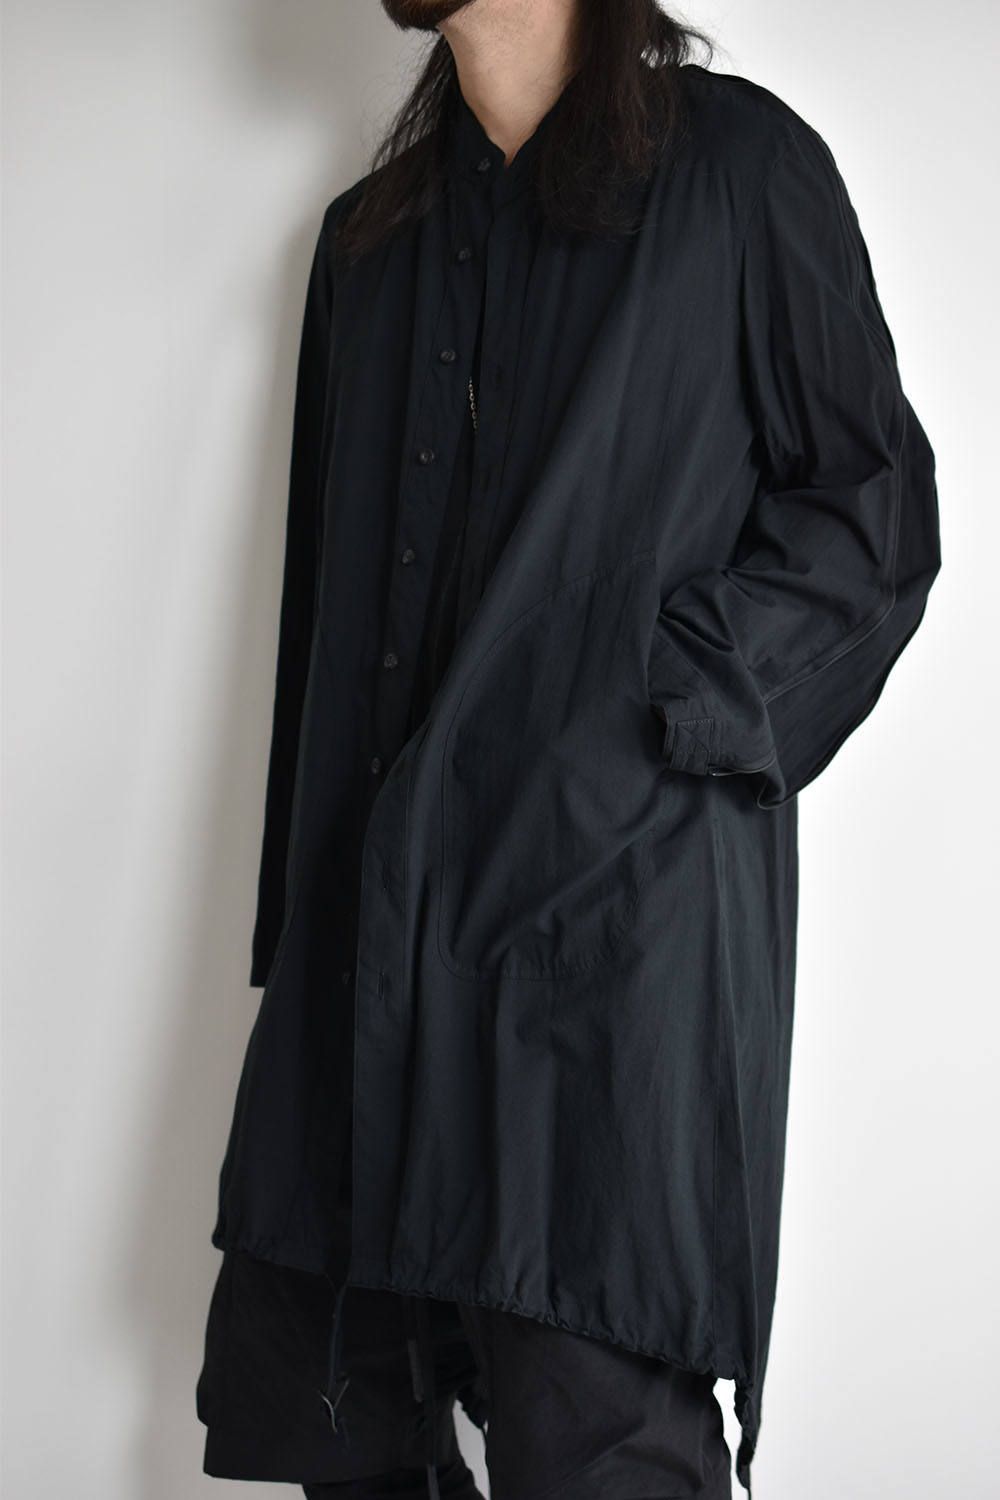 nude:masahiko maruyama - Maulti Zip Long Shirt